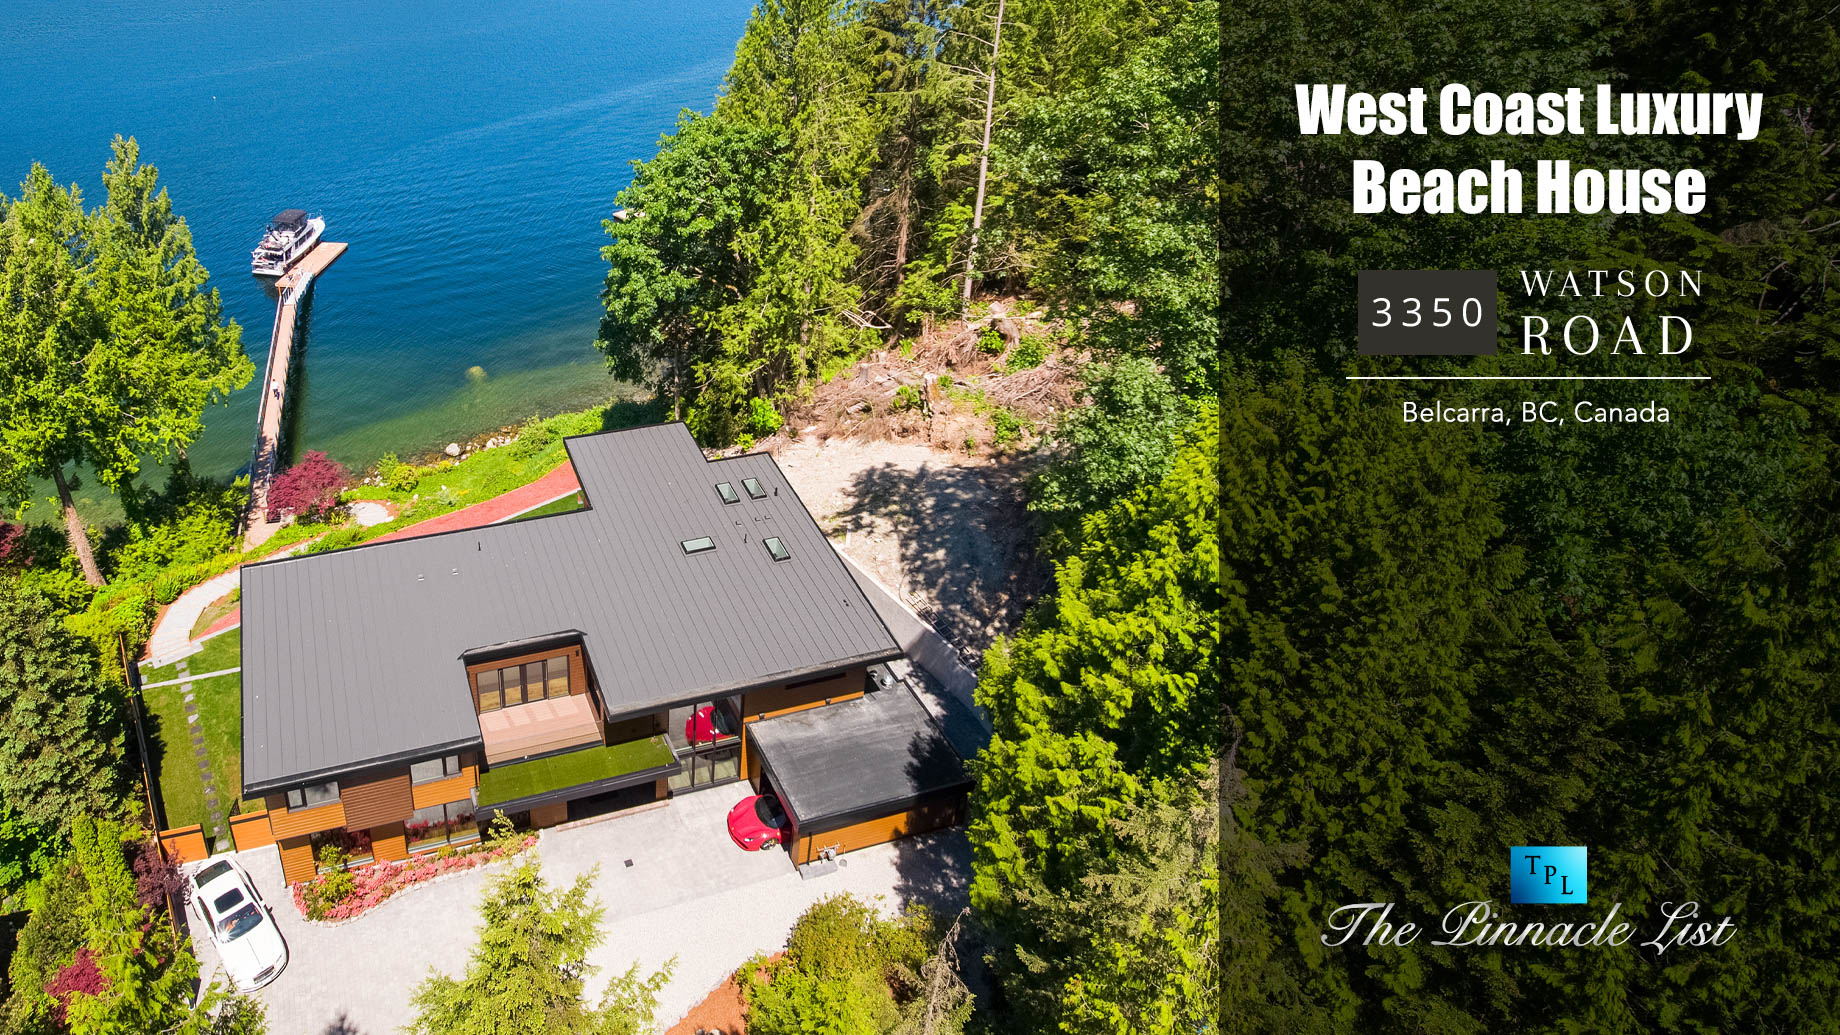 West Coast Luxury Beach House - 3350 Watson Rd, Belcarra, BC, Canada